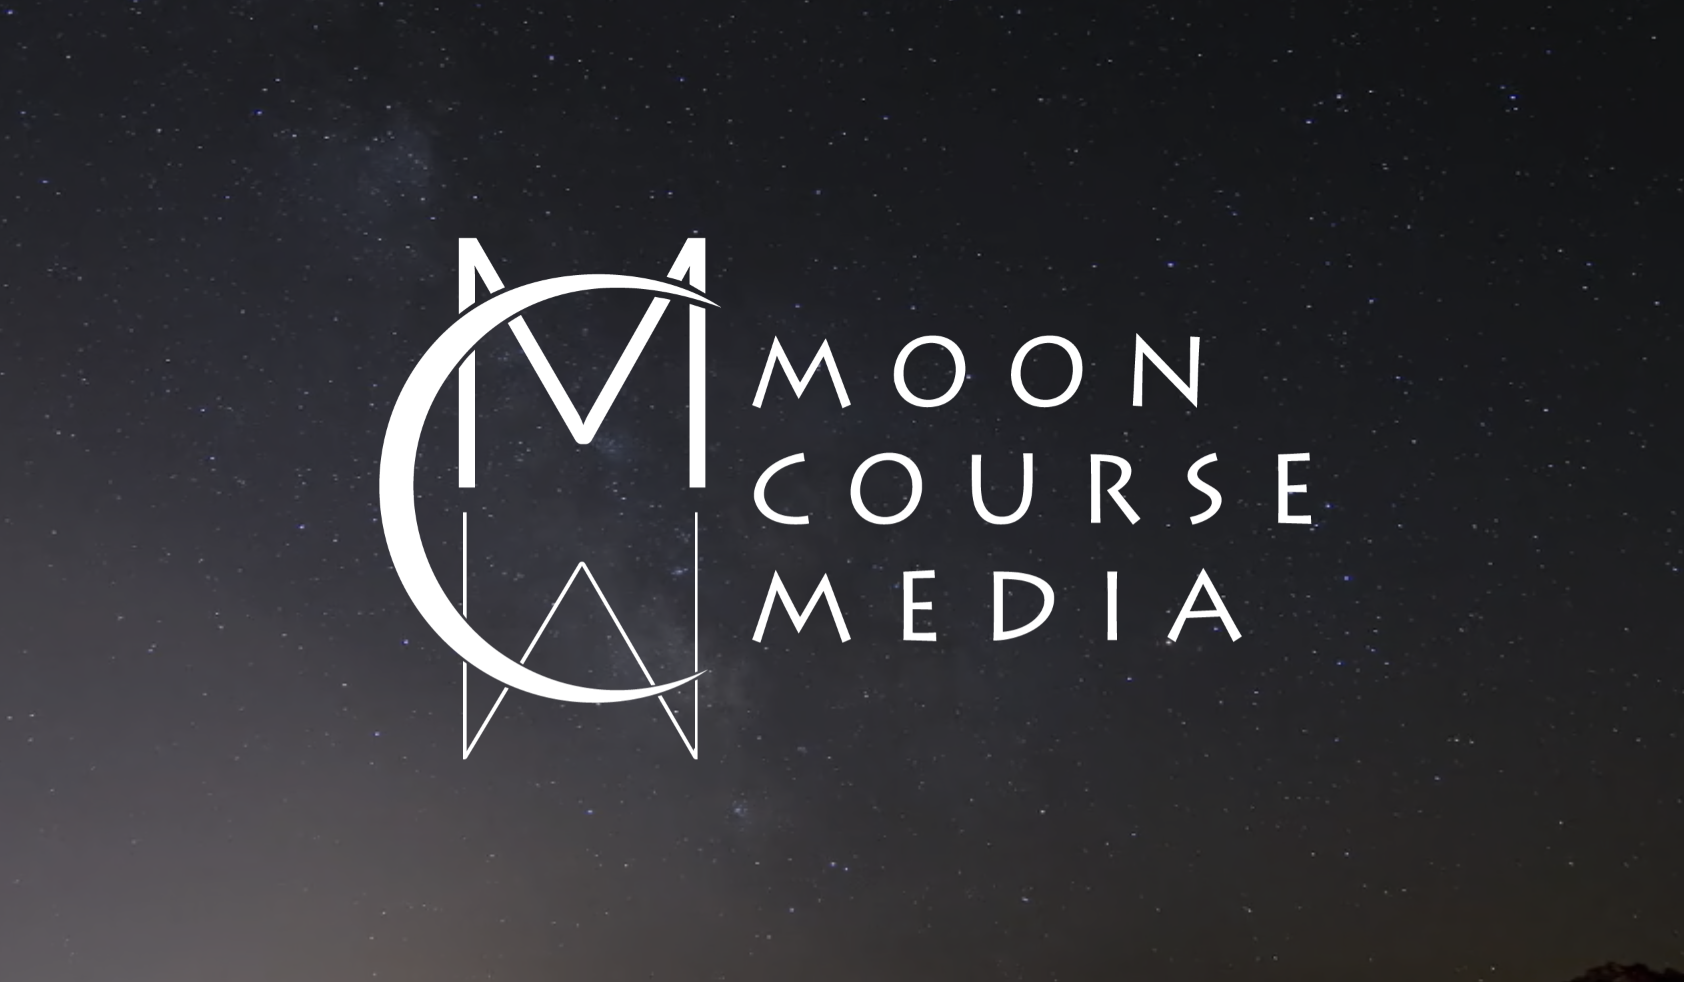 Moon Course Media